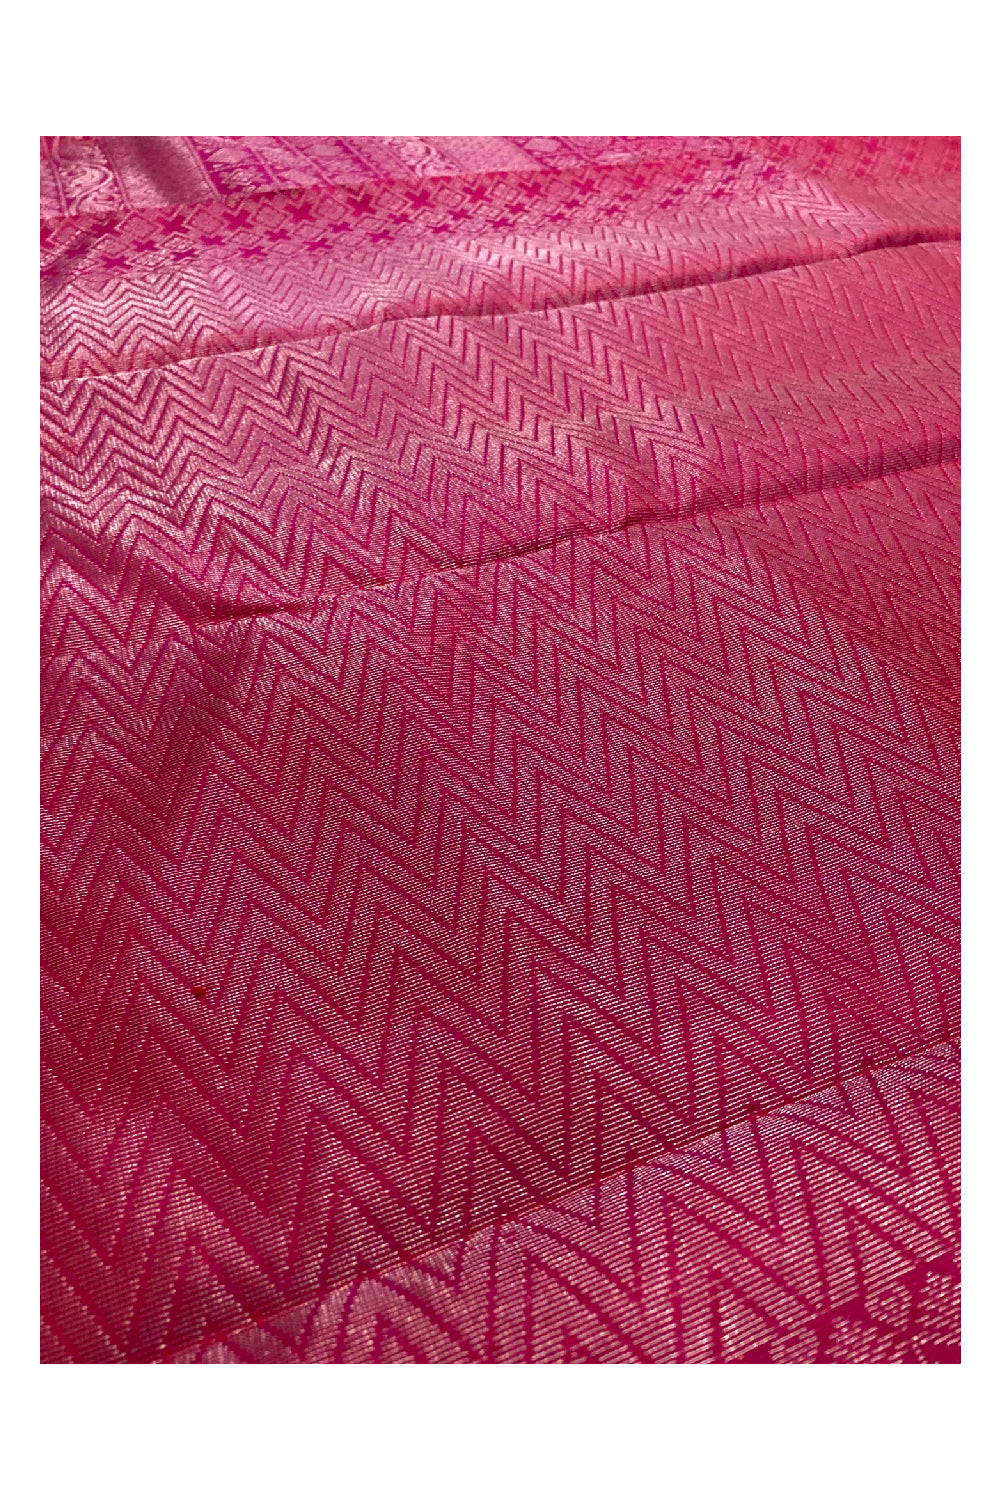 Southloom Handloom Pure Silk Manthrakodi Kanchipuram Saree in Single Magenta Colour and Silver Zari Motifs